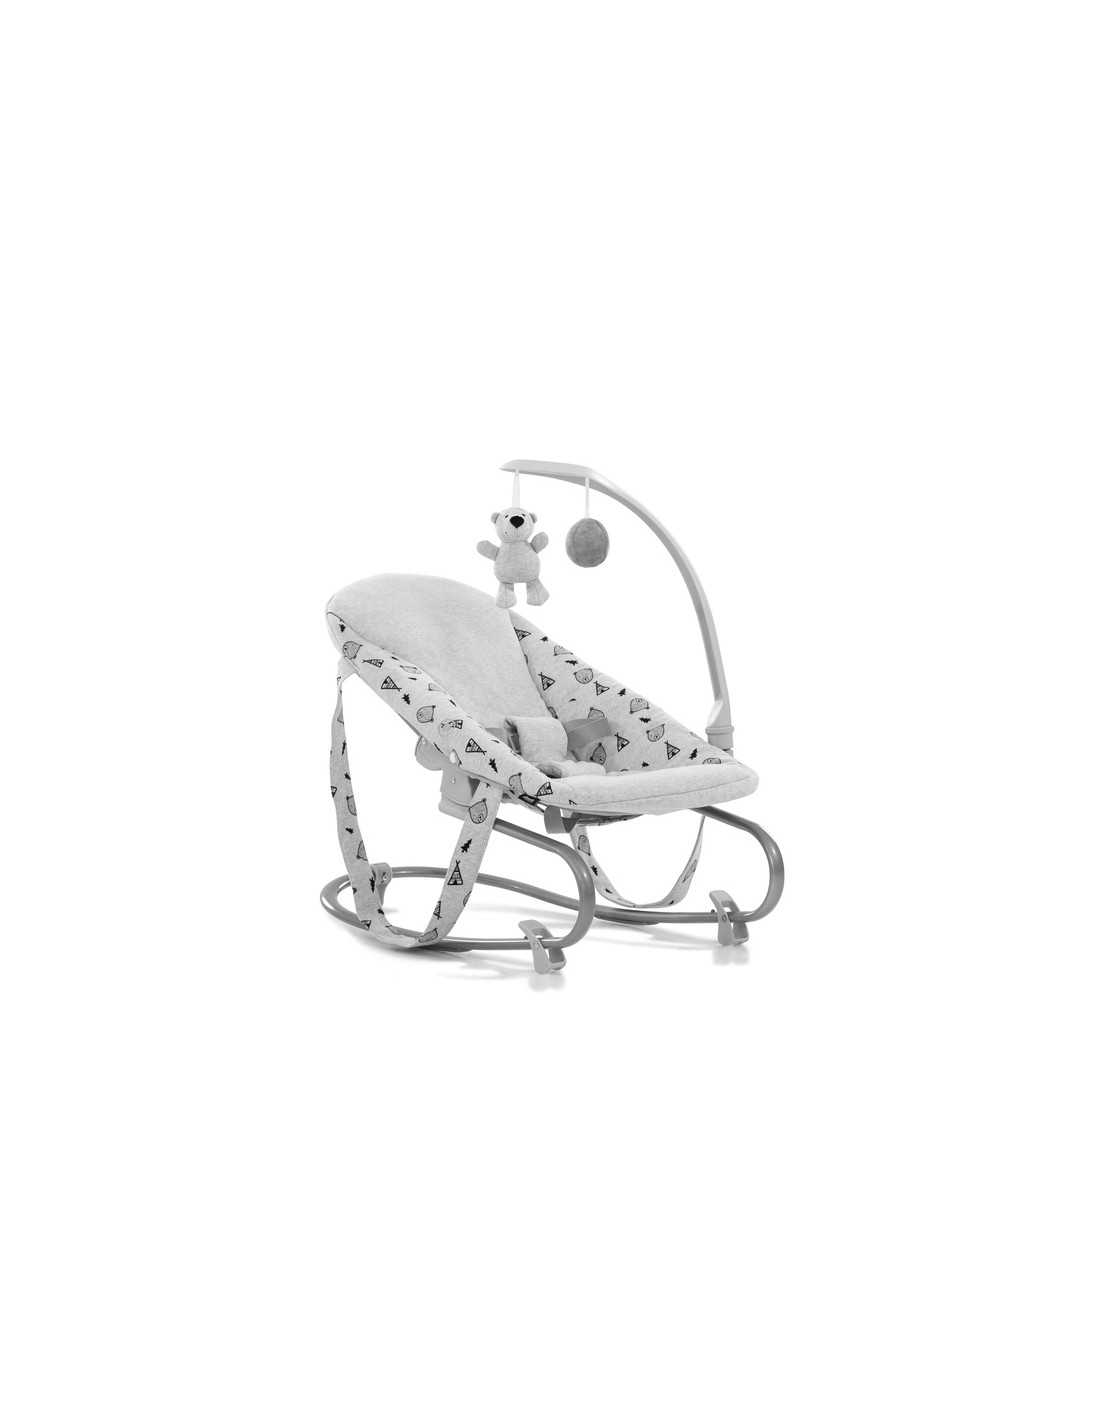 Hauck 668733 - Cojín para trona, diseño de rayas (respaldo: 40 x 24 cm,  asiento: 44 x